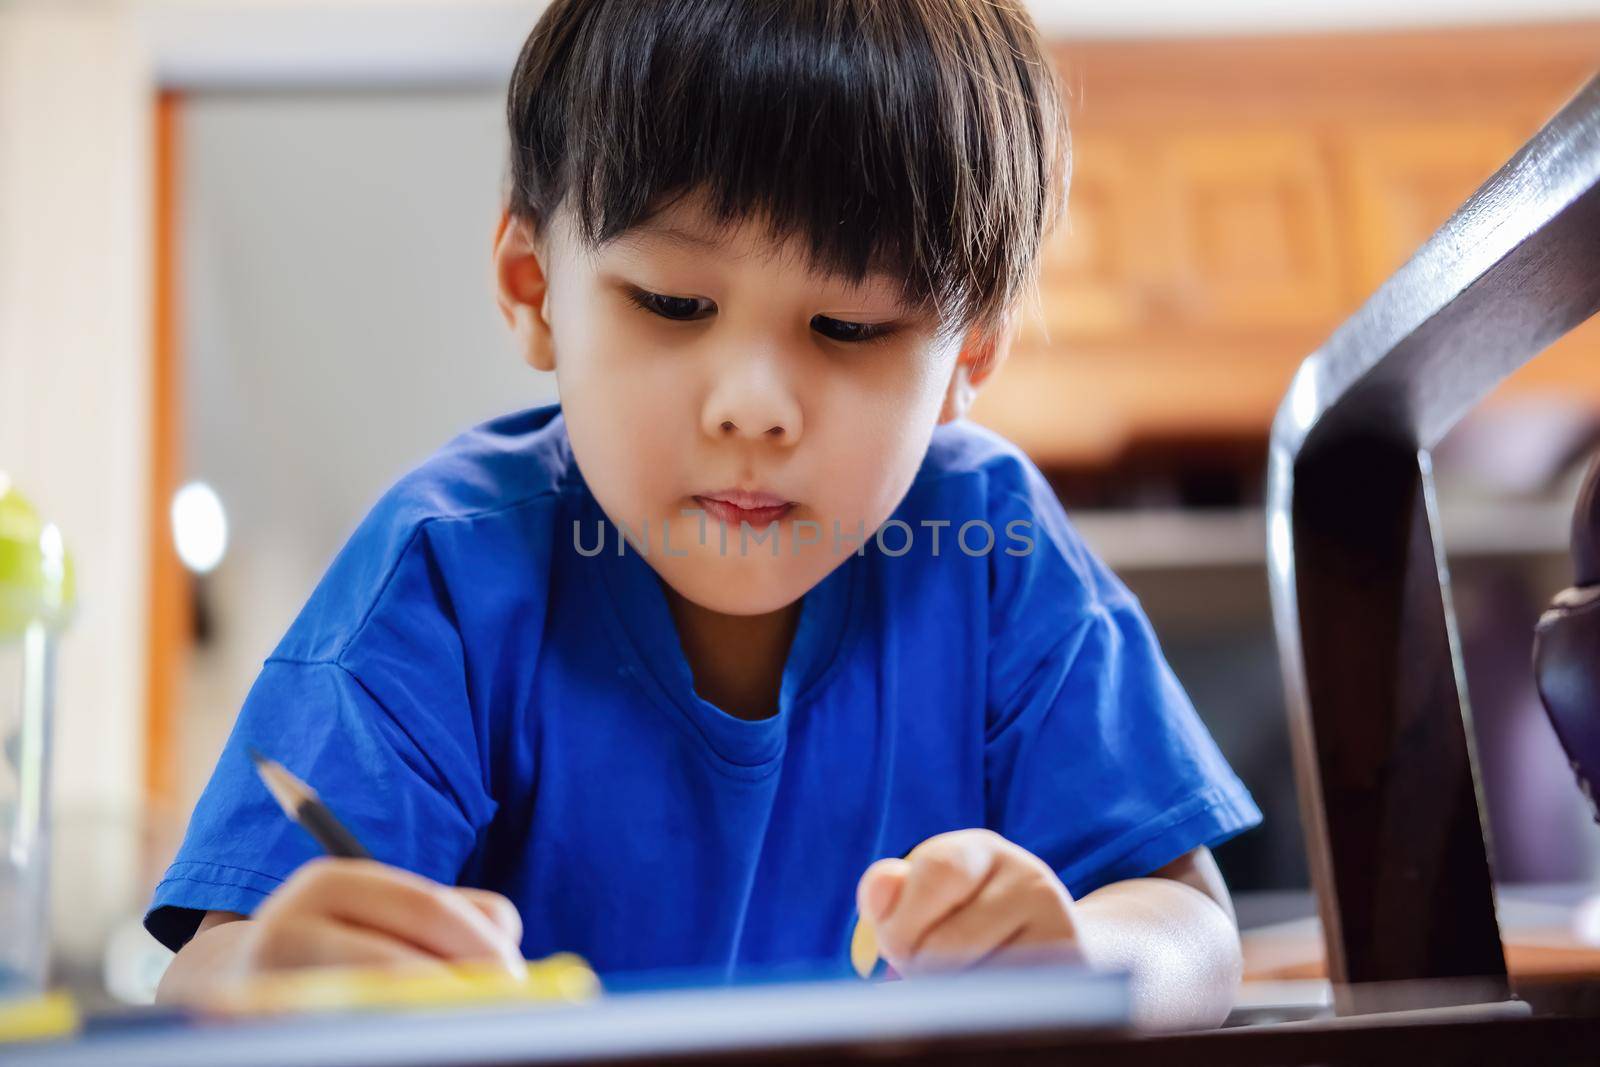 kindergarten children coloring their homework to the teacher. by Manastrong